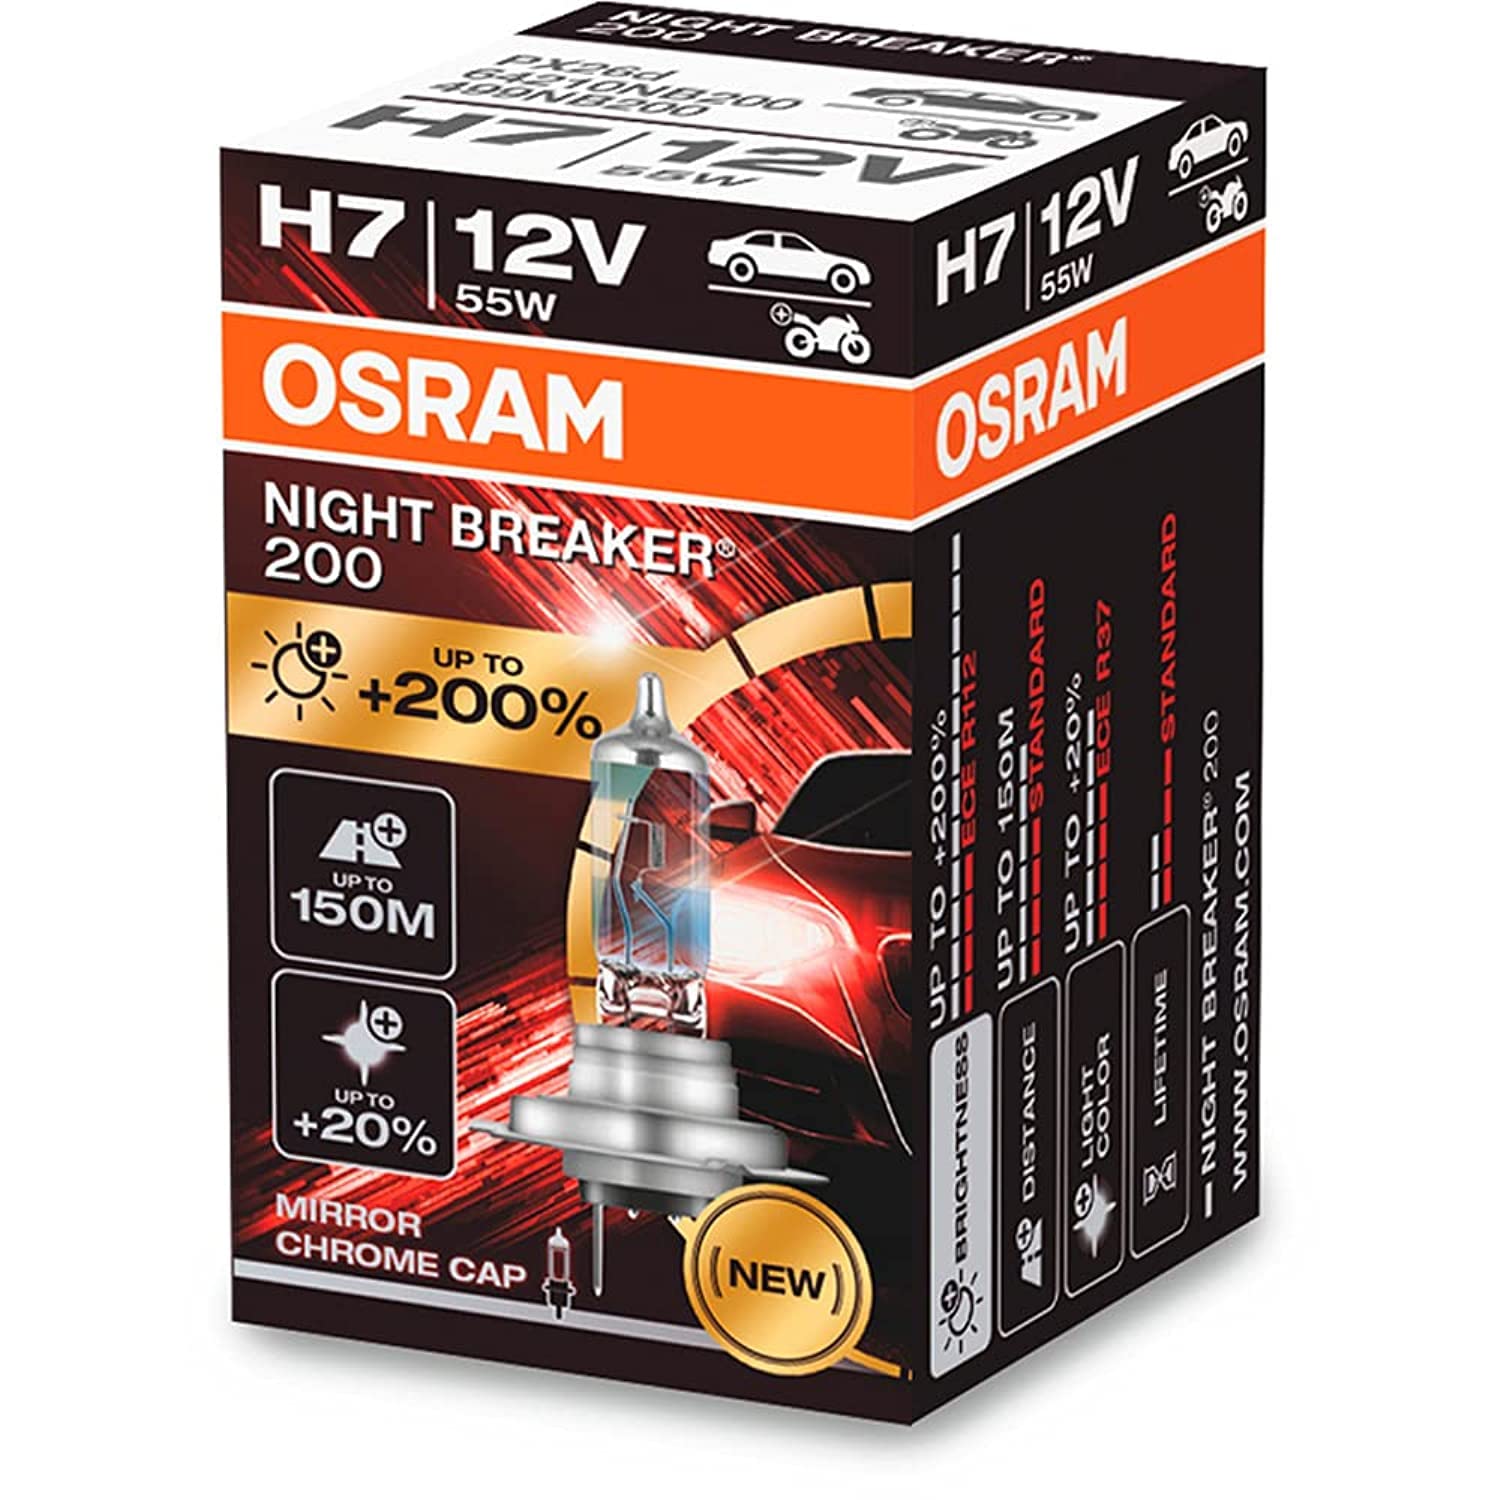 Osram Night Breaker 200 Laser Halogen Birne - H7 - 12V/55W - pro stück von Osram